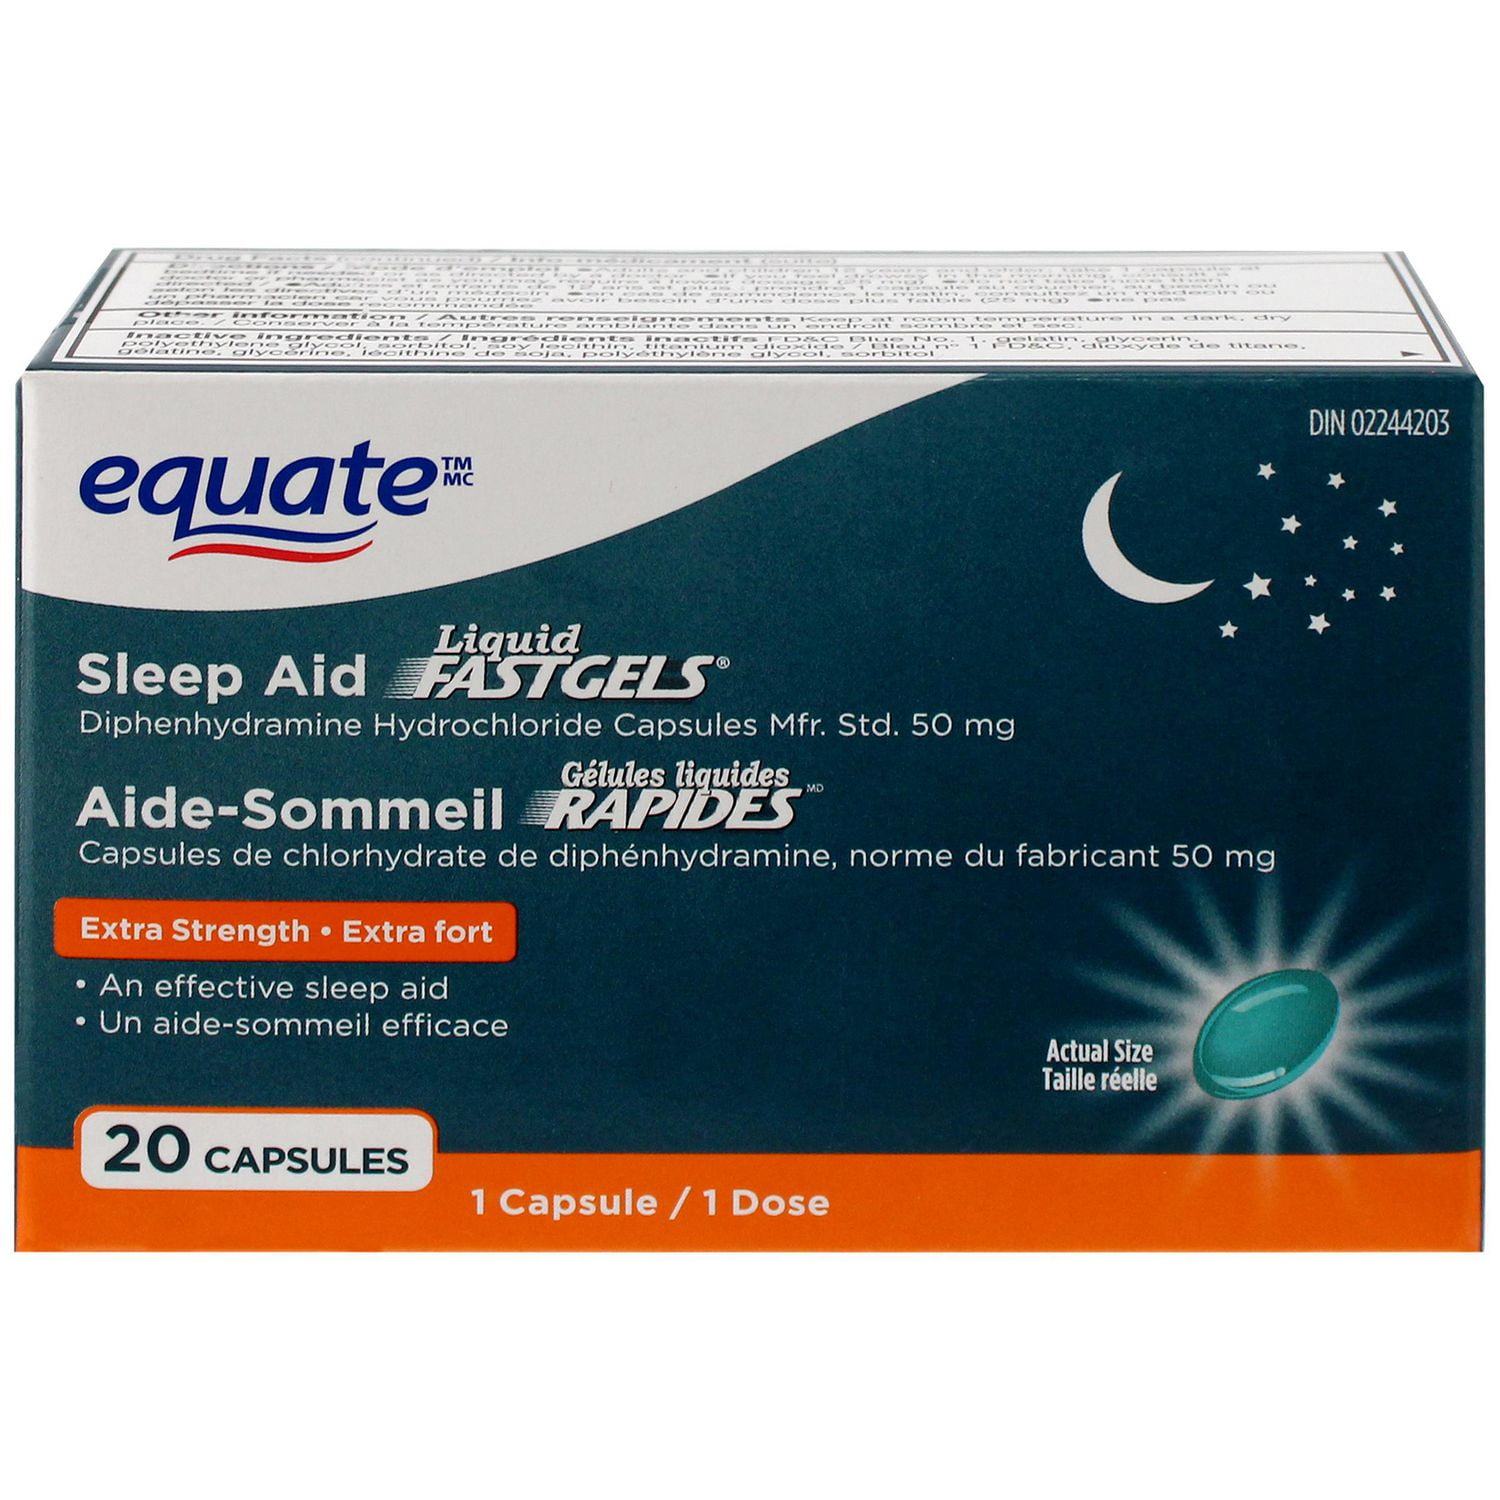 Equate Sleep aid, Liquid Fastgels, Diphenhydramine Hydrochloride